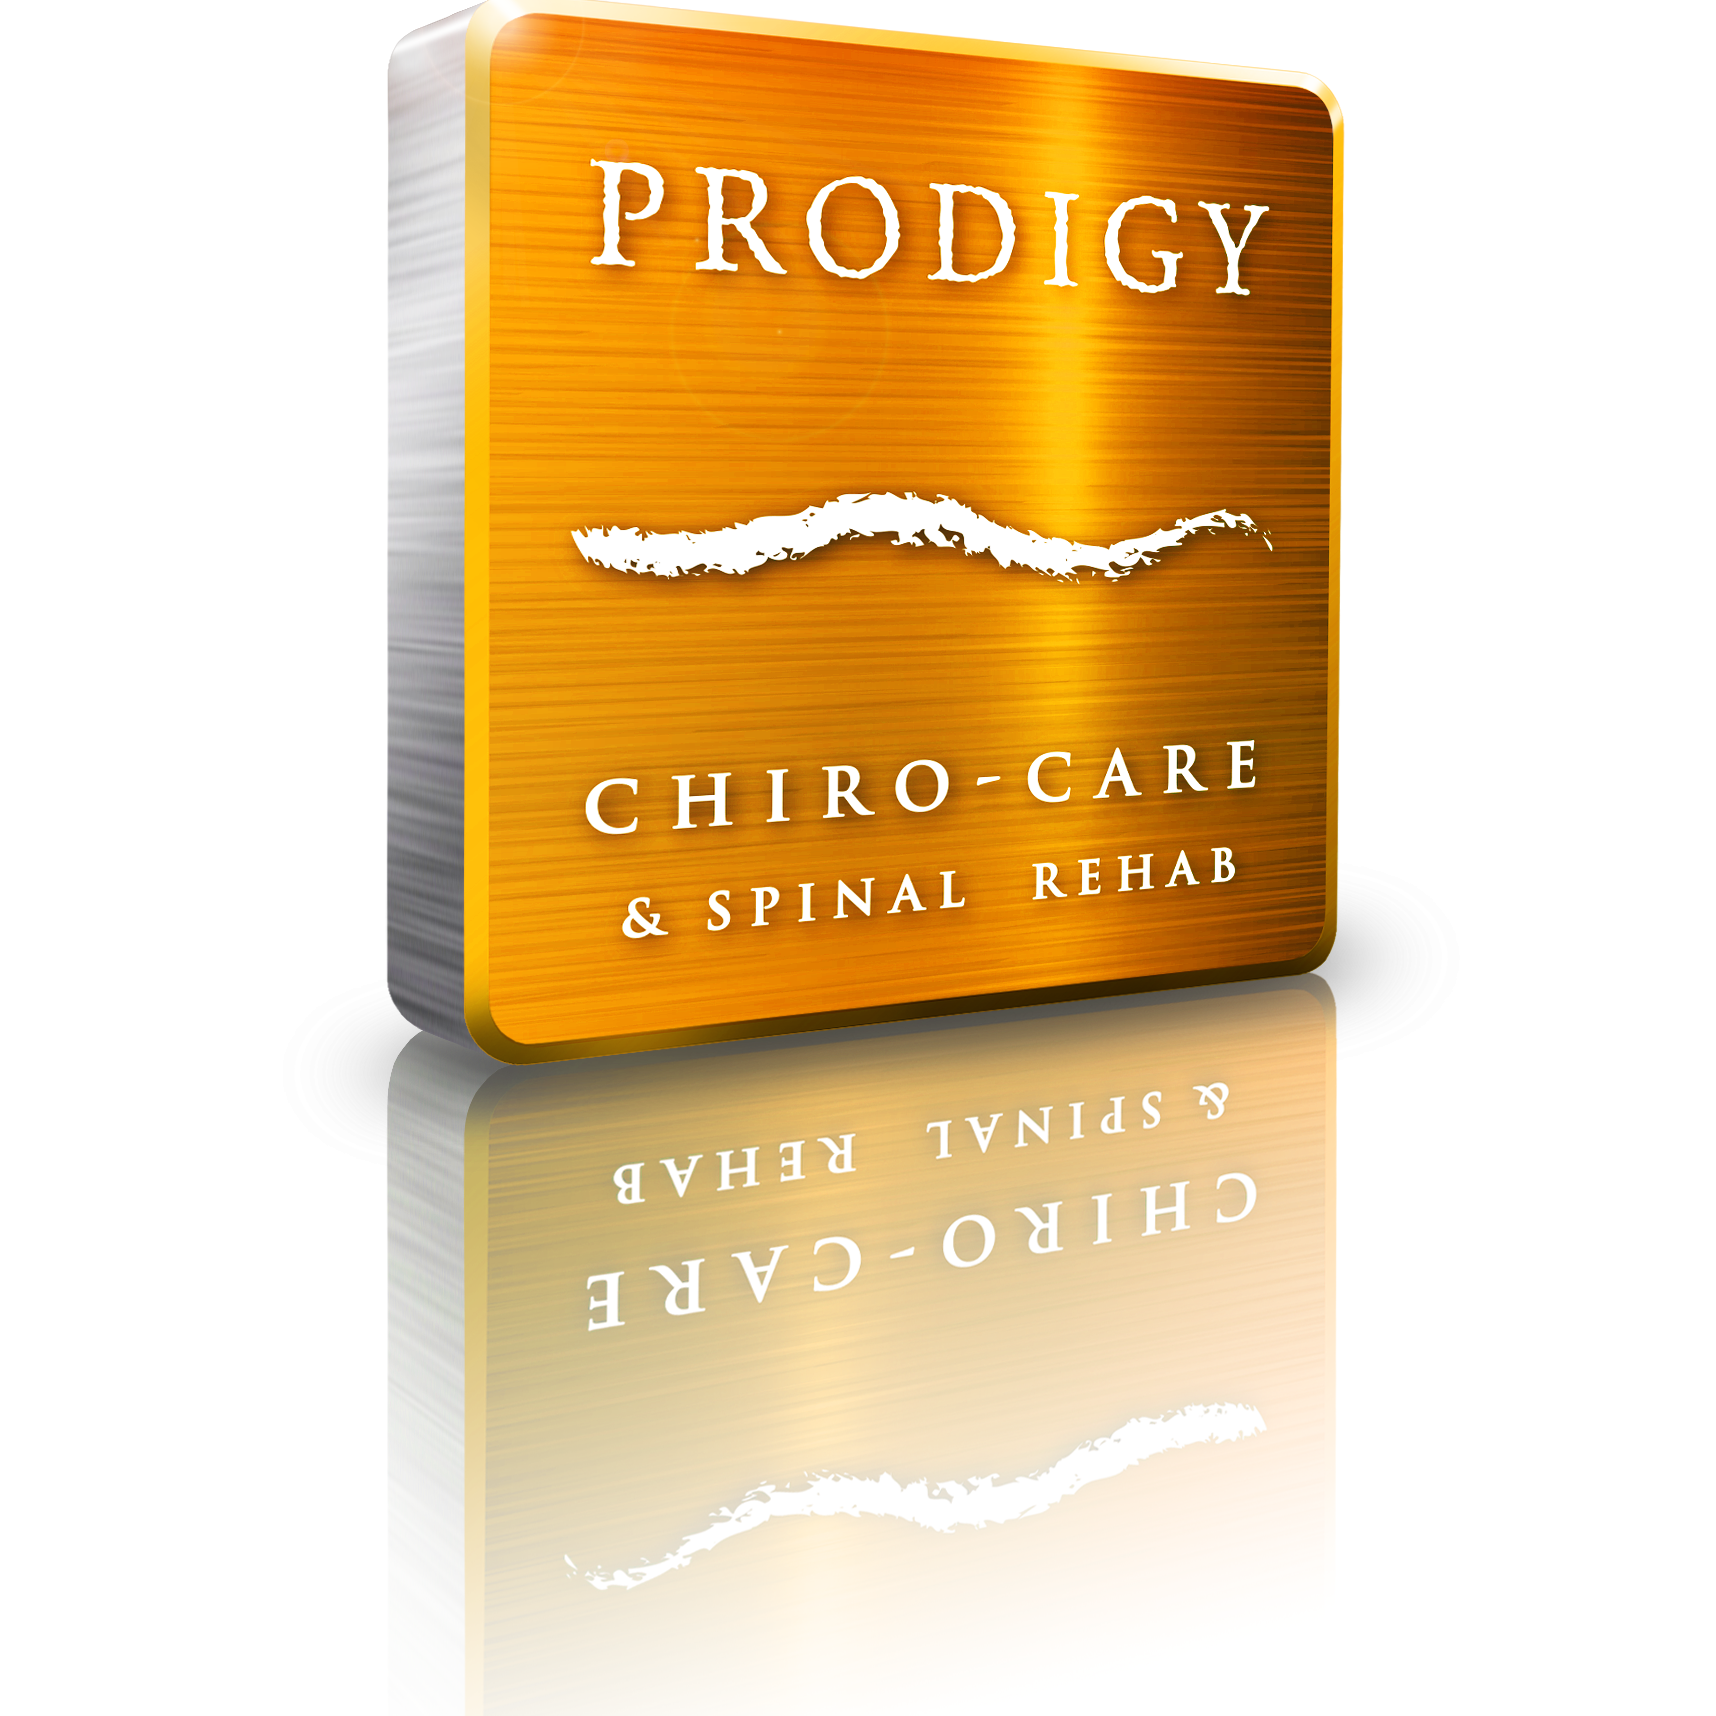 Prodigy Chiro Care & Spinal Rehab Logo